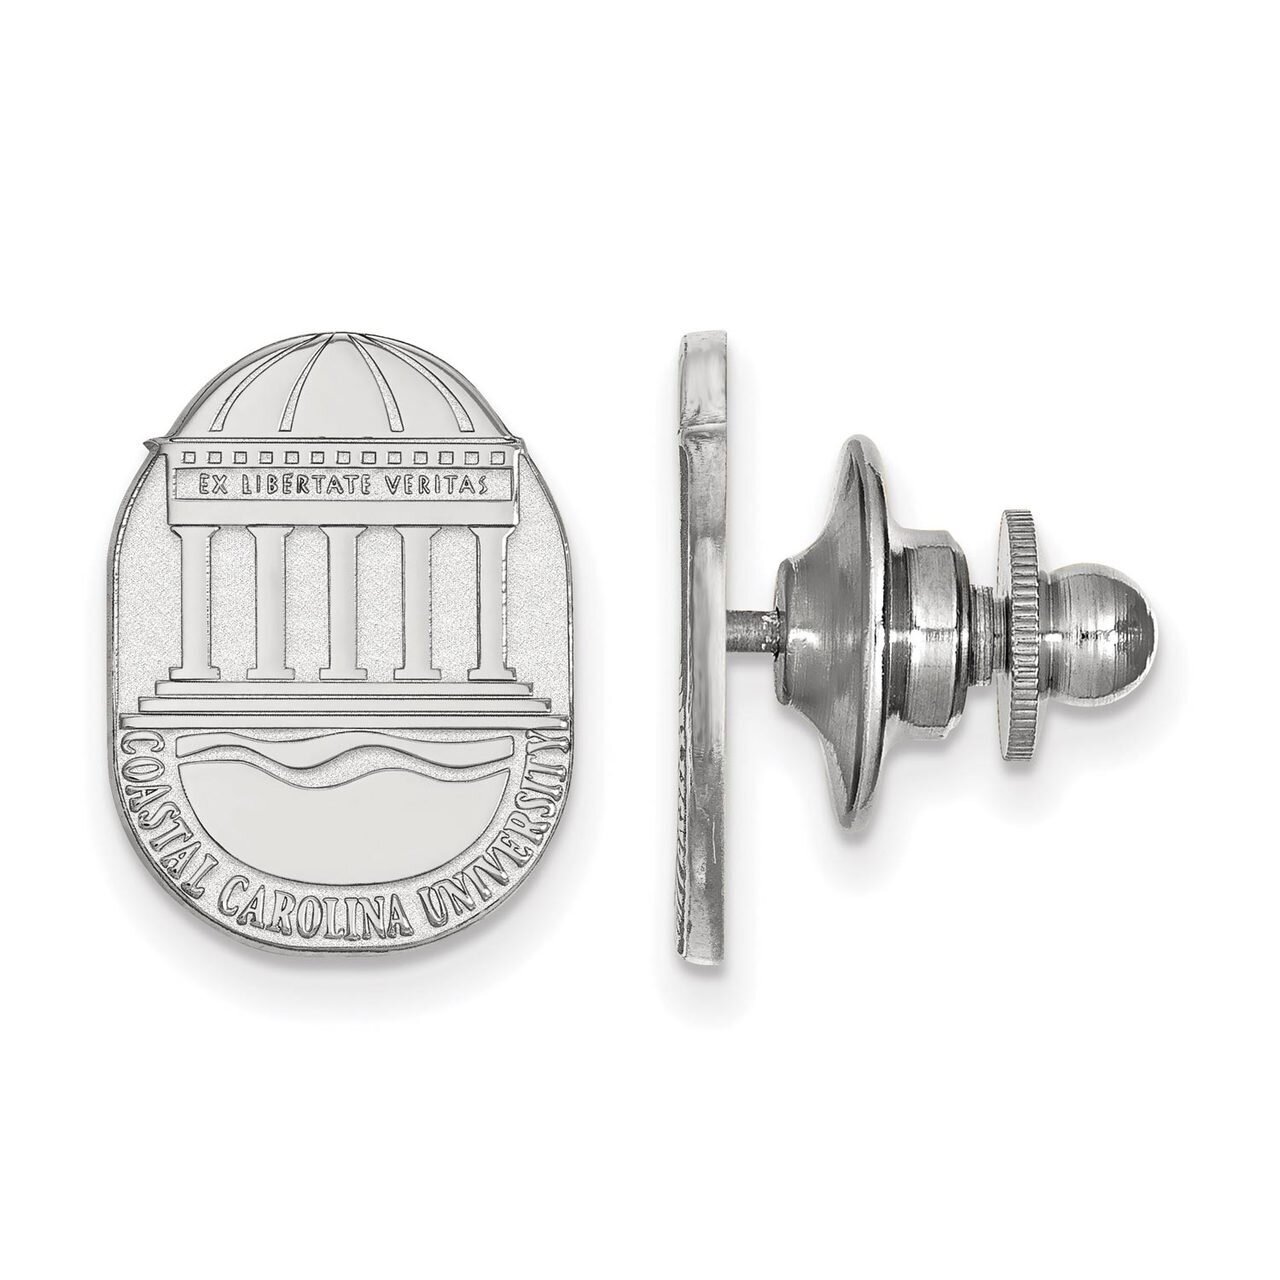 Coastal Carolina University Crest Lapel Pin Sterling Silver SS021CCU